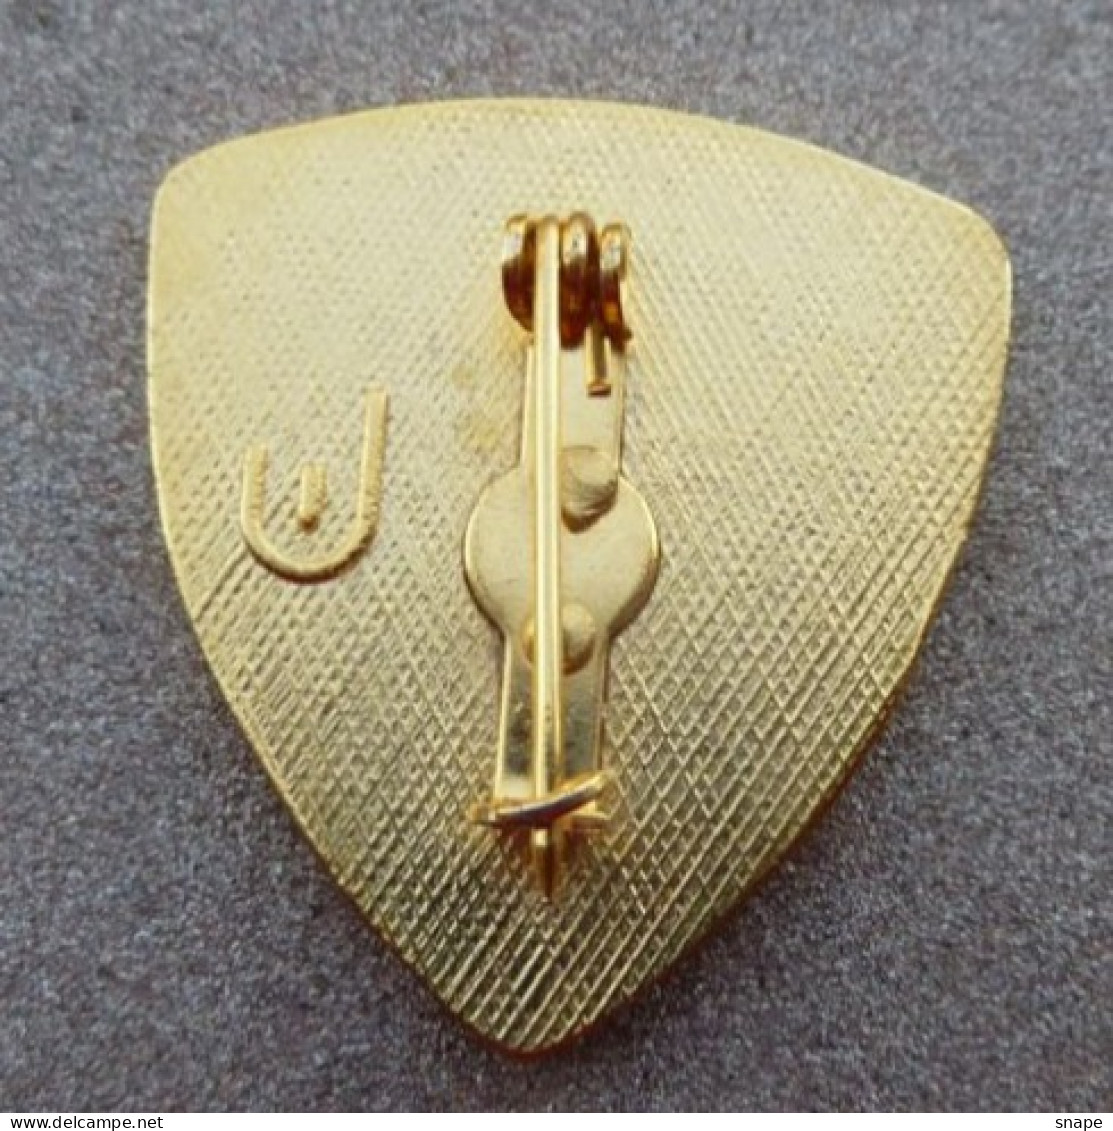 DISTINTIVO A Spilla Brigata Bersaglieri Garibaldi - Esercito Italiano - Italian Army Pinned Badge - Used (286) - Army